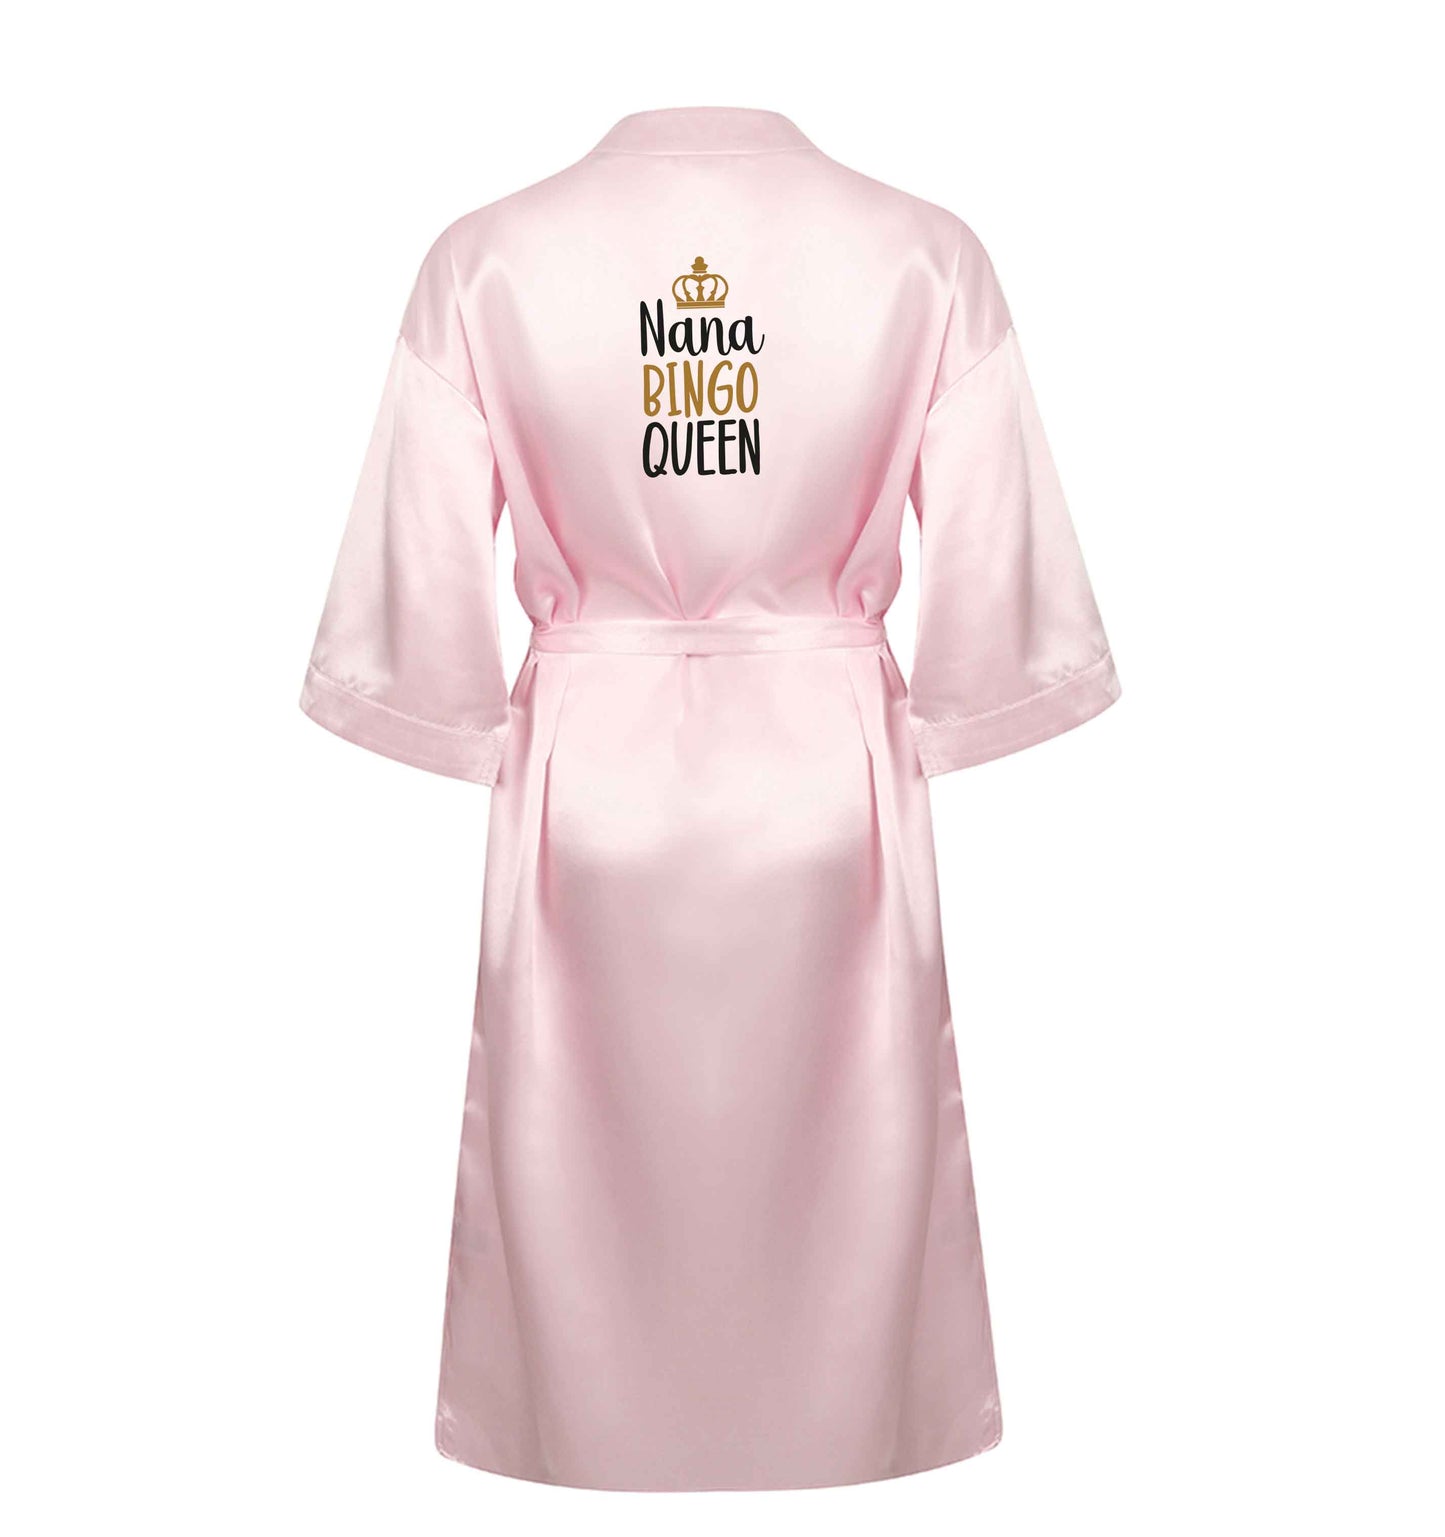 Personalised bingo queen XL/XXL pink ladies dressing gown size 16/18